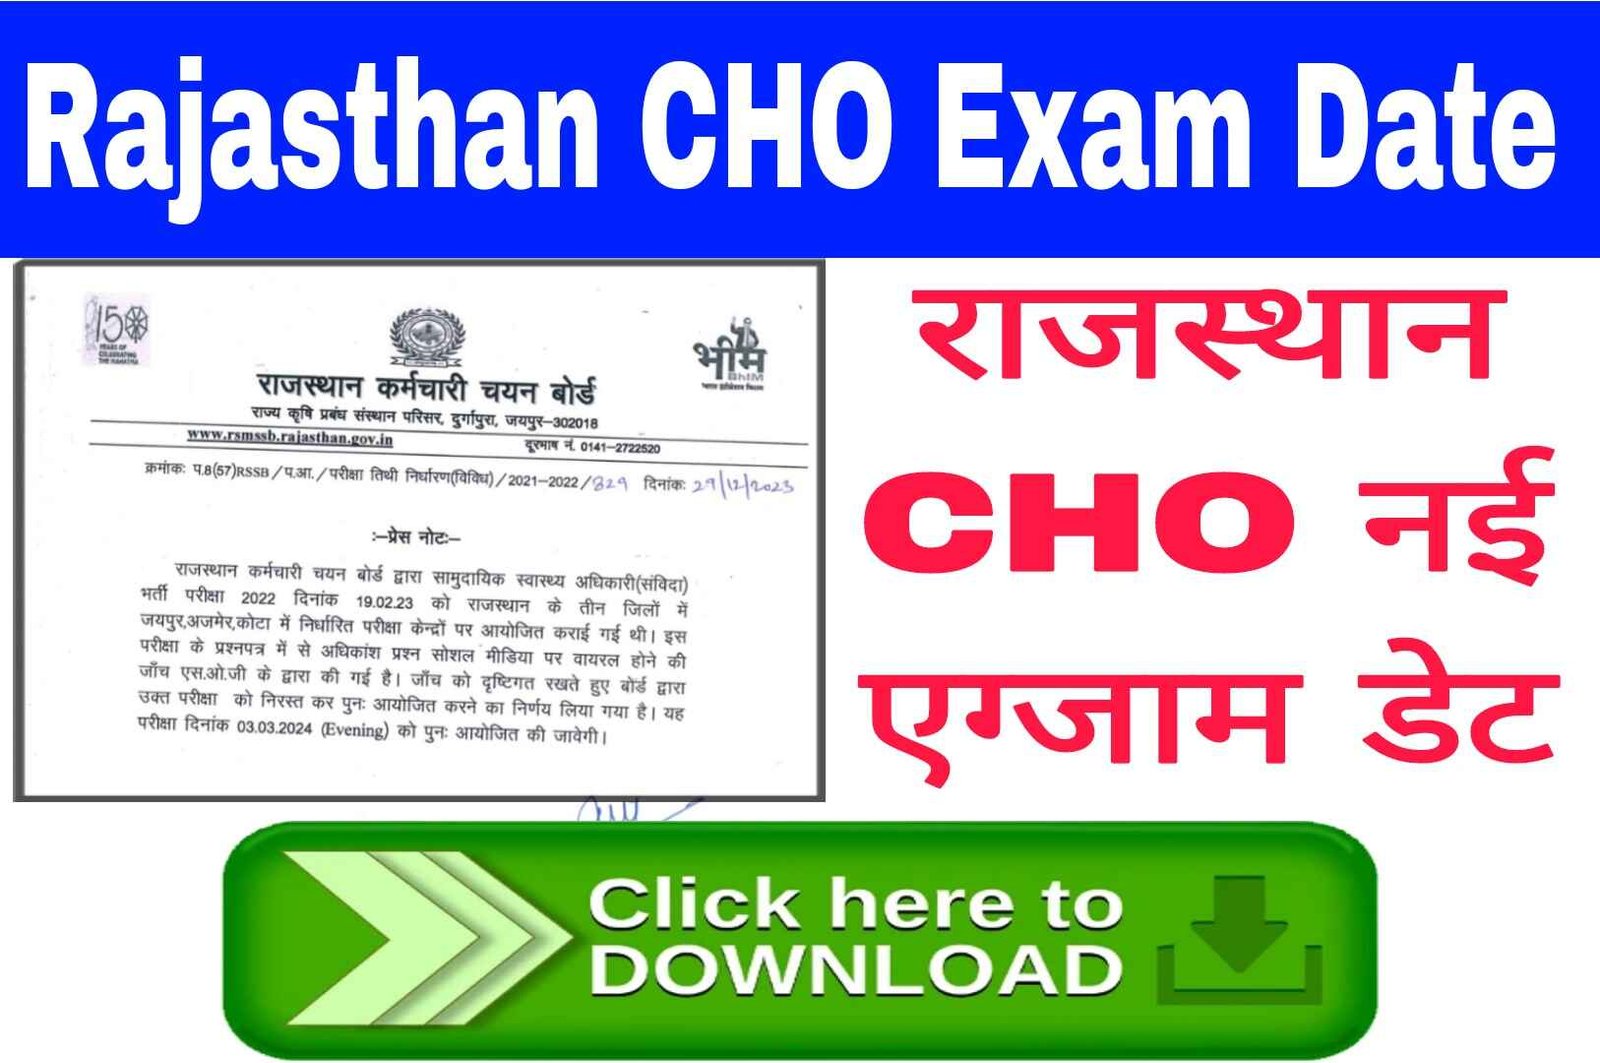 Rajasthan CHO Exam Date